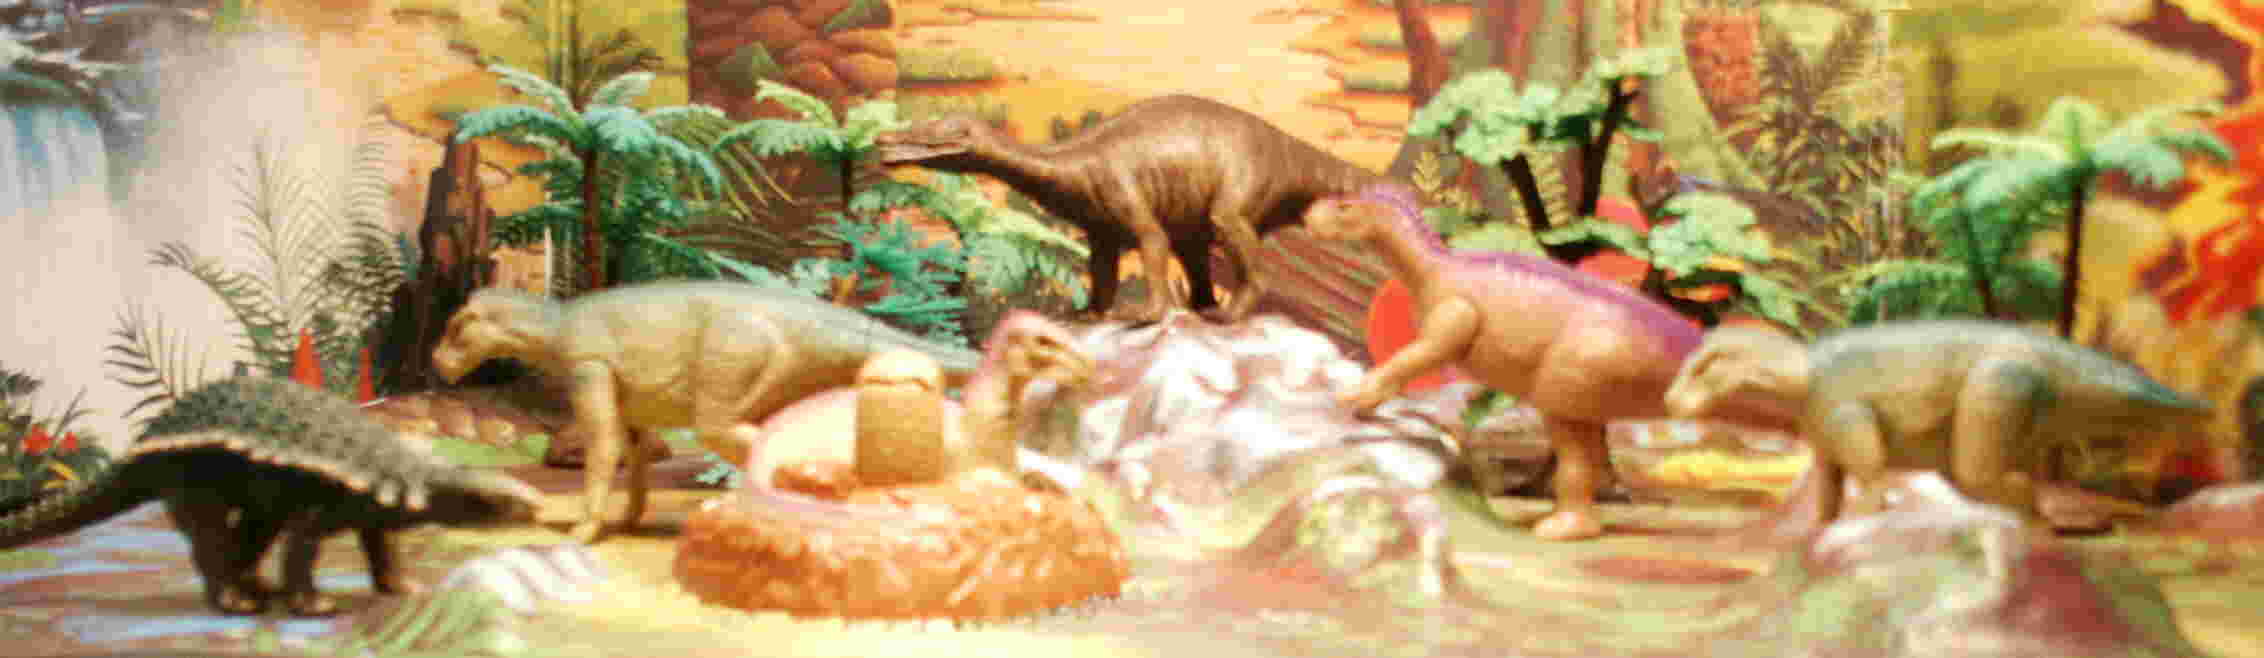 Iguanodon Disney Dinosaur